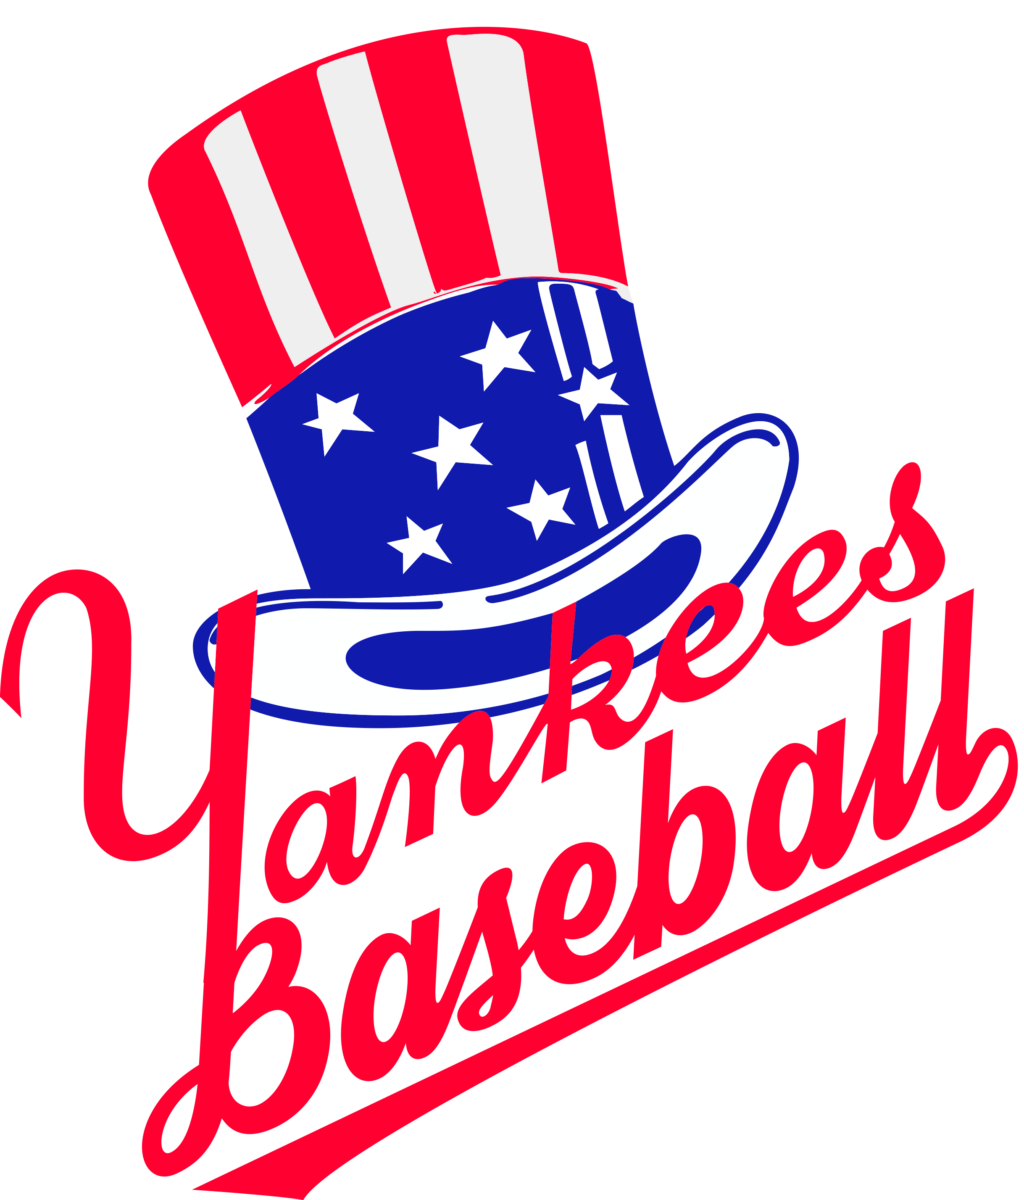 new york yankees 07 MLB New York Yankees SVG, SVG Files For Silhouette, New York Yankees Files For Cricut, New York Yankees SVG, DXF, EPS, PNG Instant Download. New York Yankees SVG, SVG Files For Silhouette, New York Yankees Files For Cricut, New York Yankees SVG, DXF, EPS, PNG Instant Download.